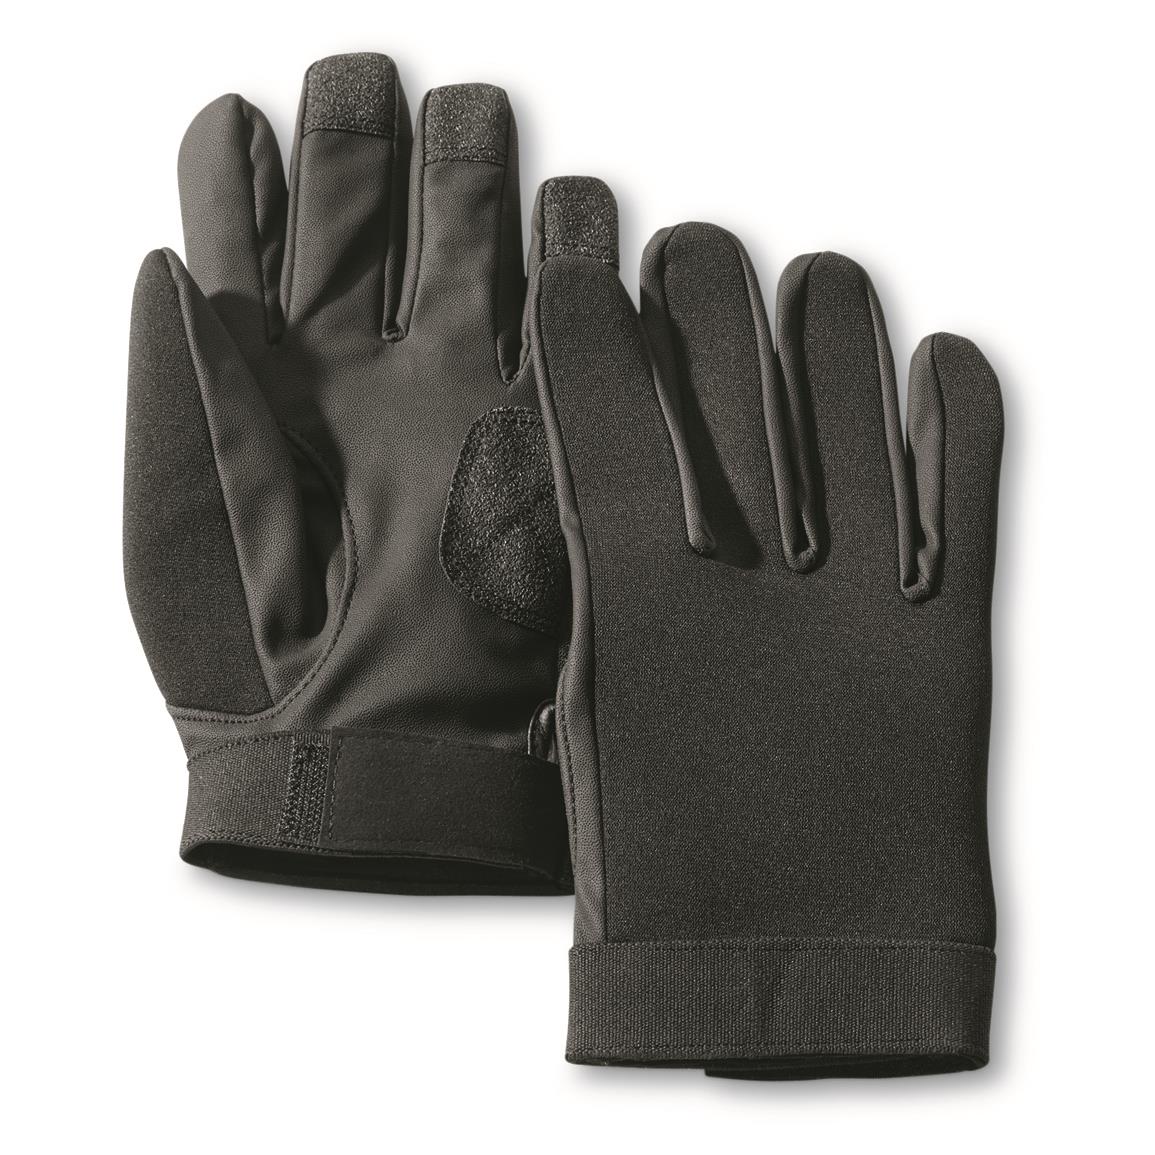 Mil-Tec Tactical Neoprene Gloves, Black